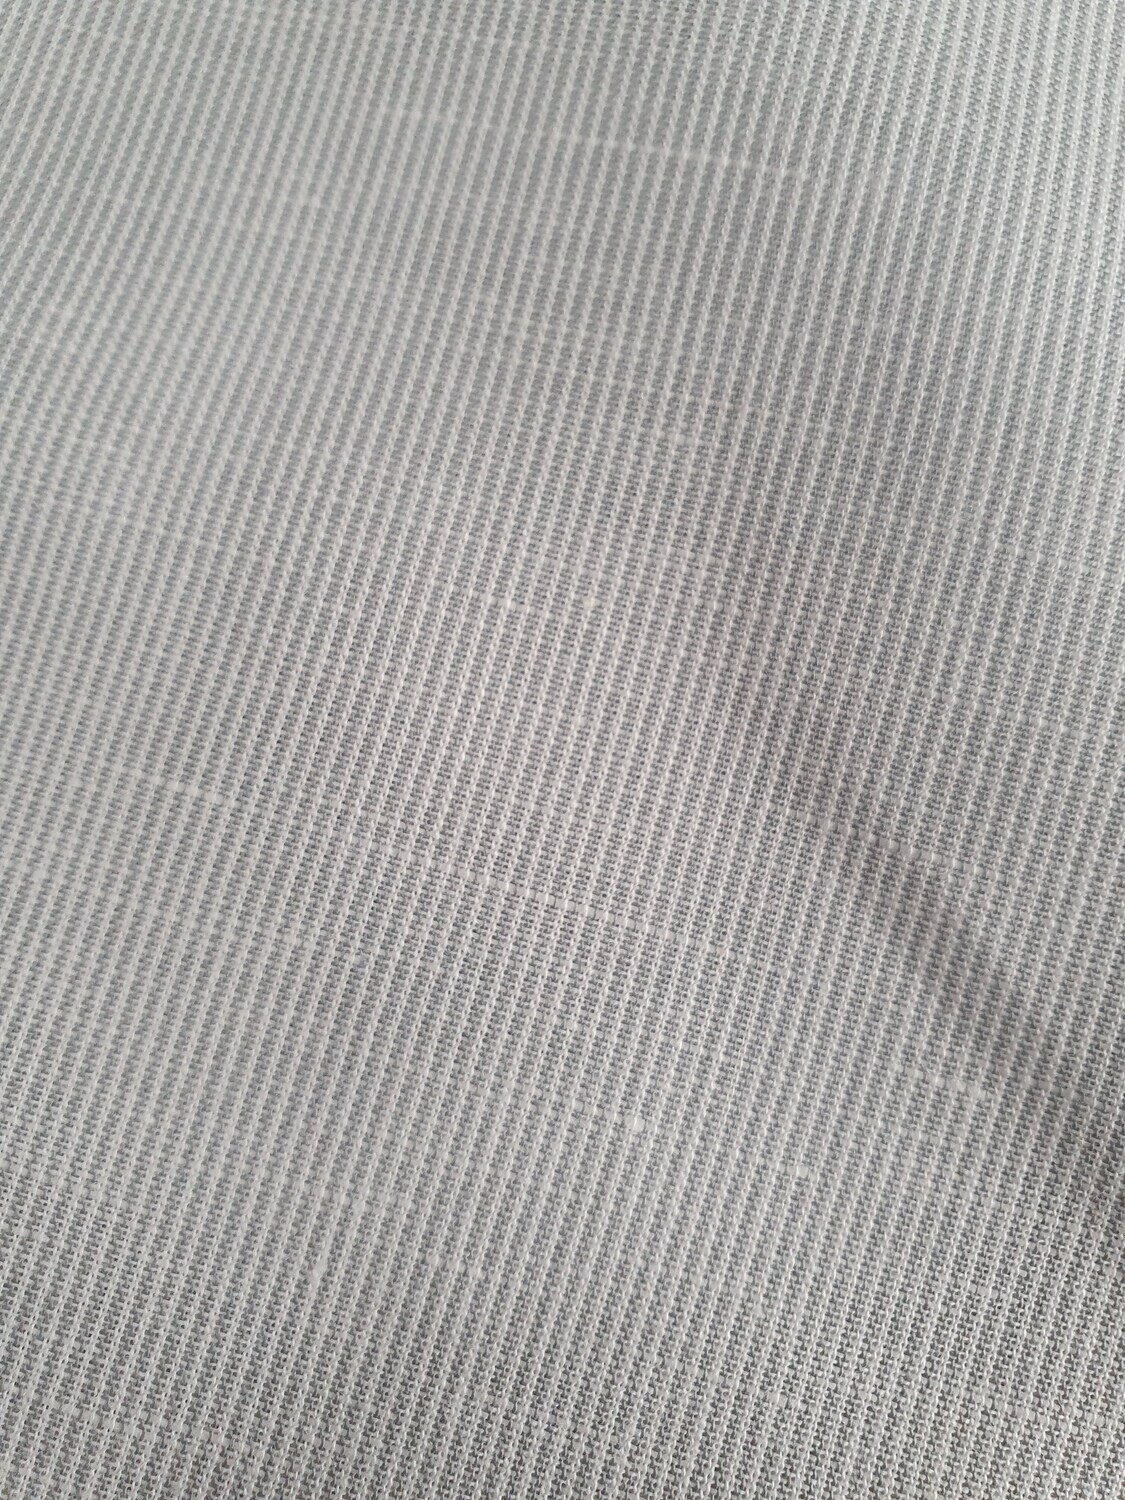 Jemima - Linen Cotton Mix - Light Grey Stripe